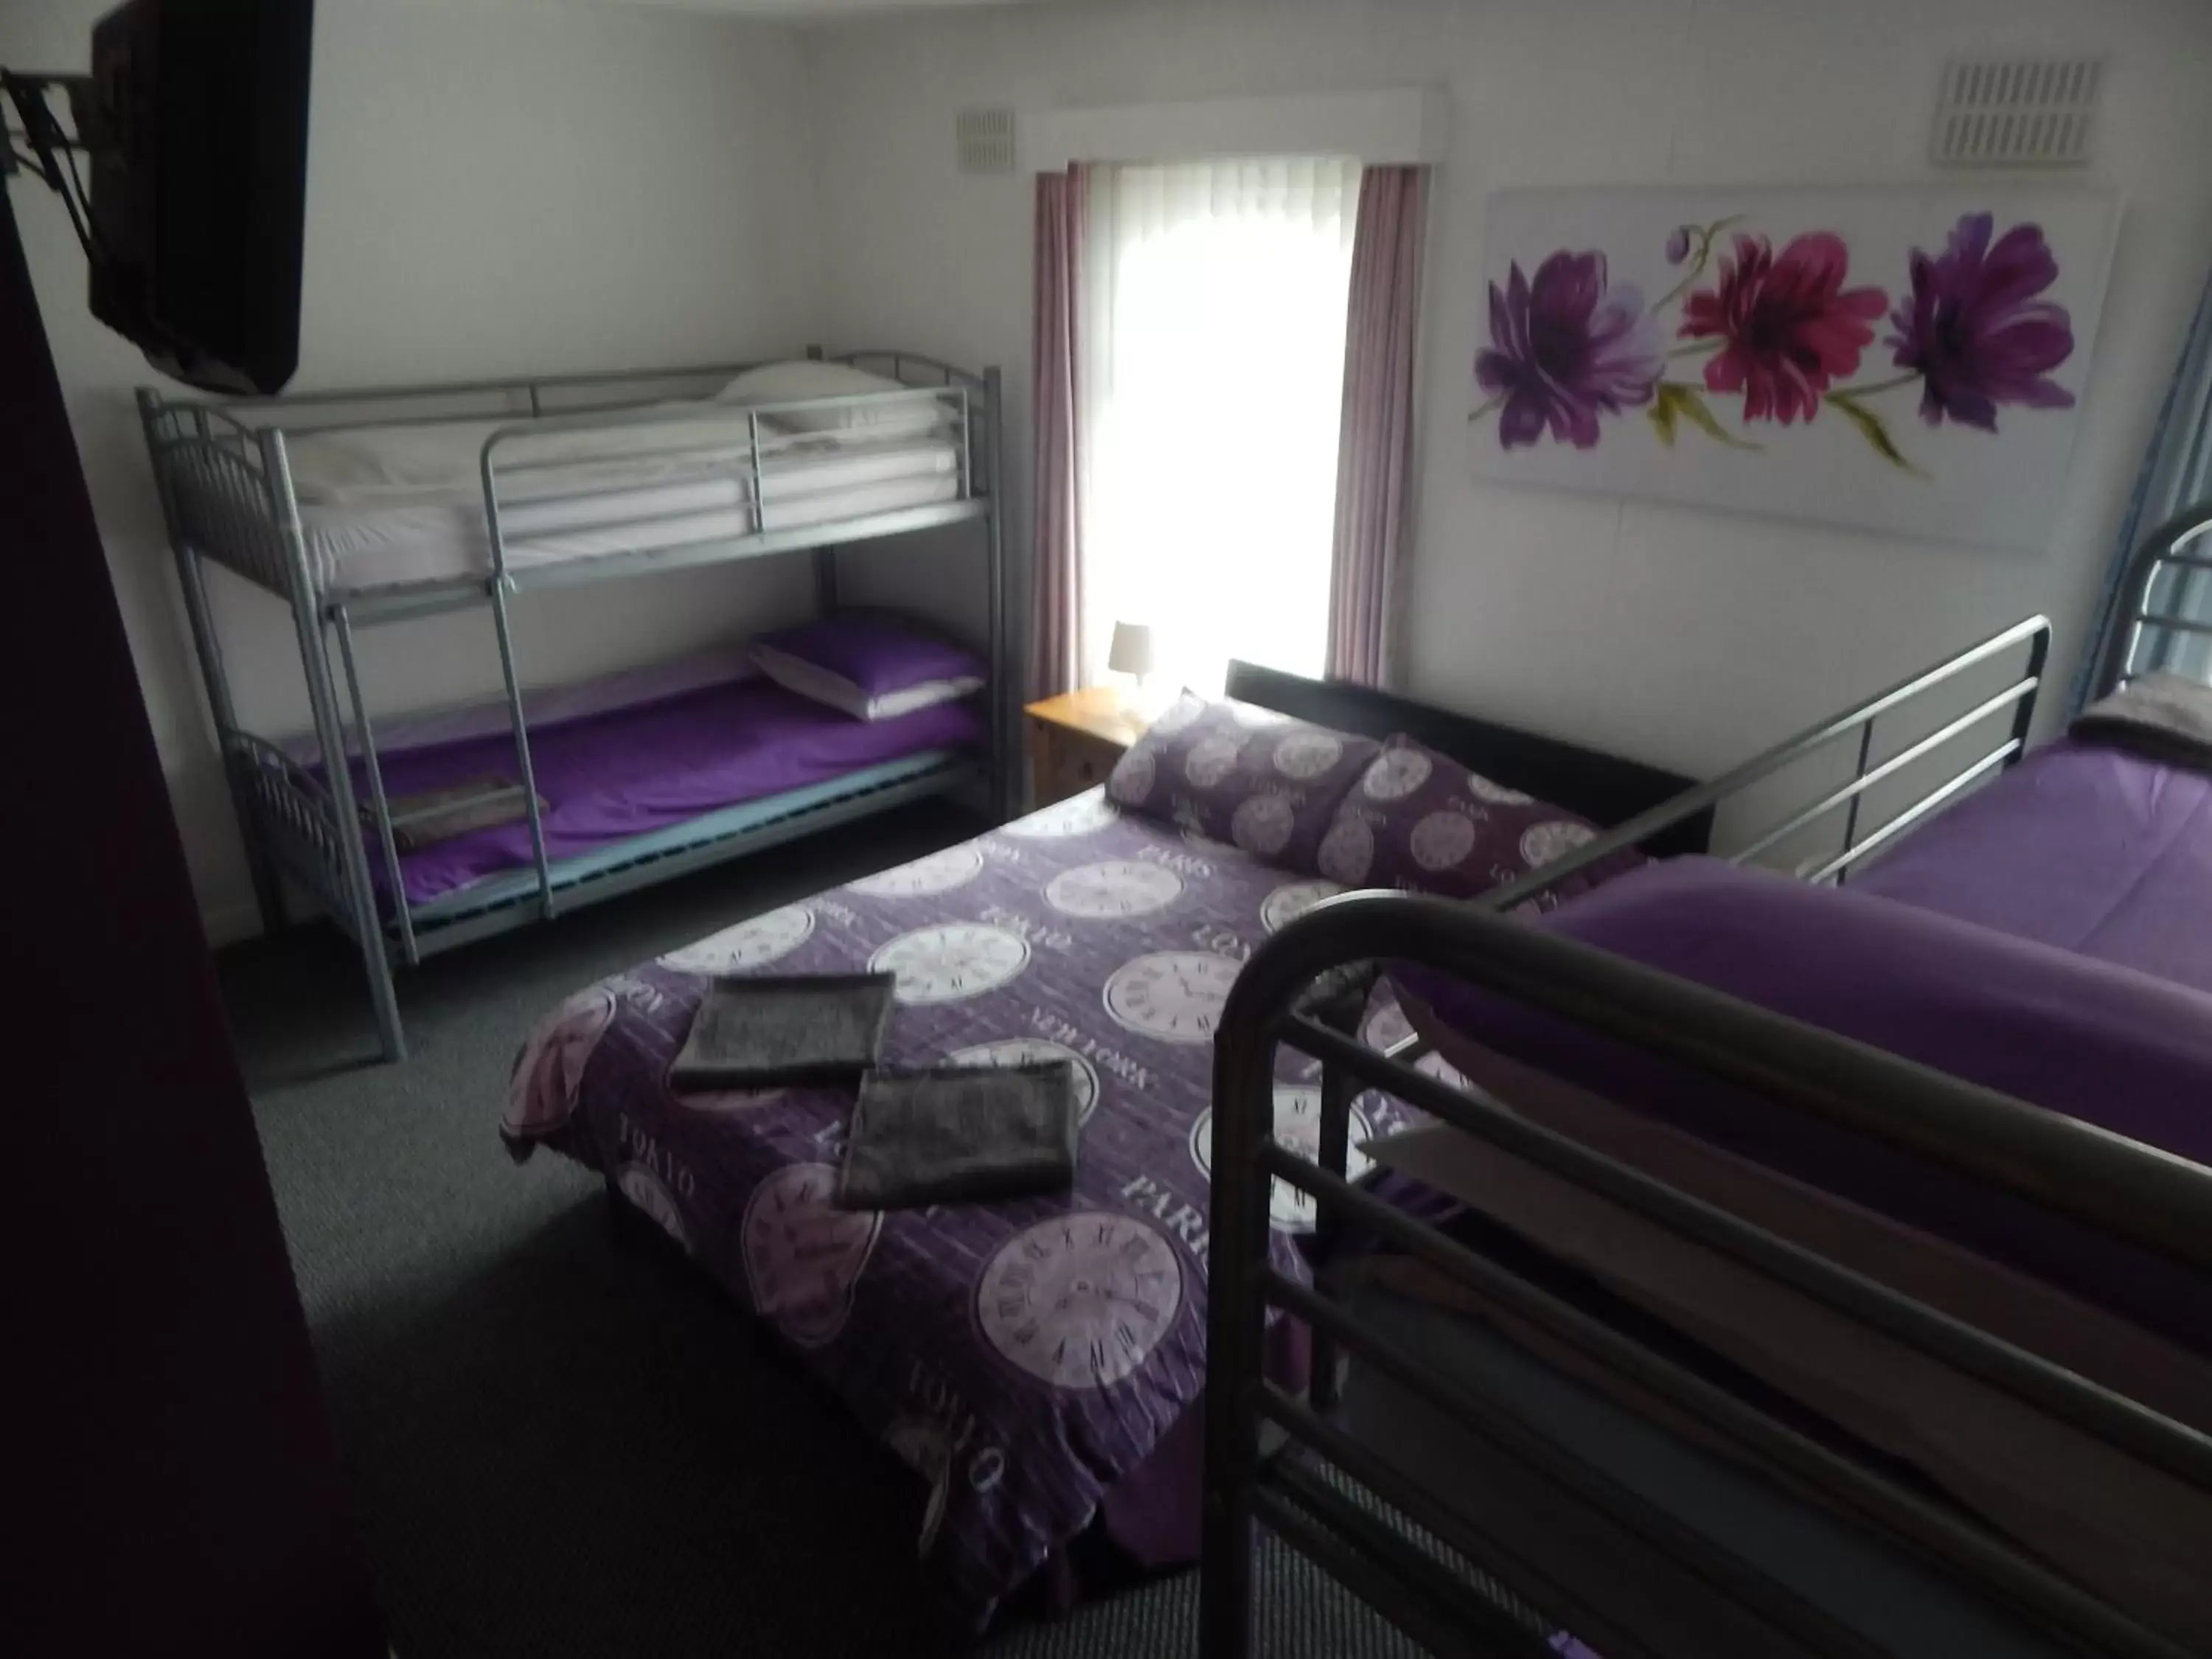 Bunk Bed in Llanryan Guest House